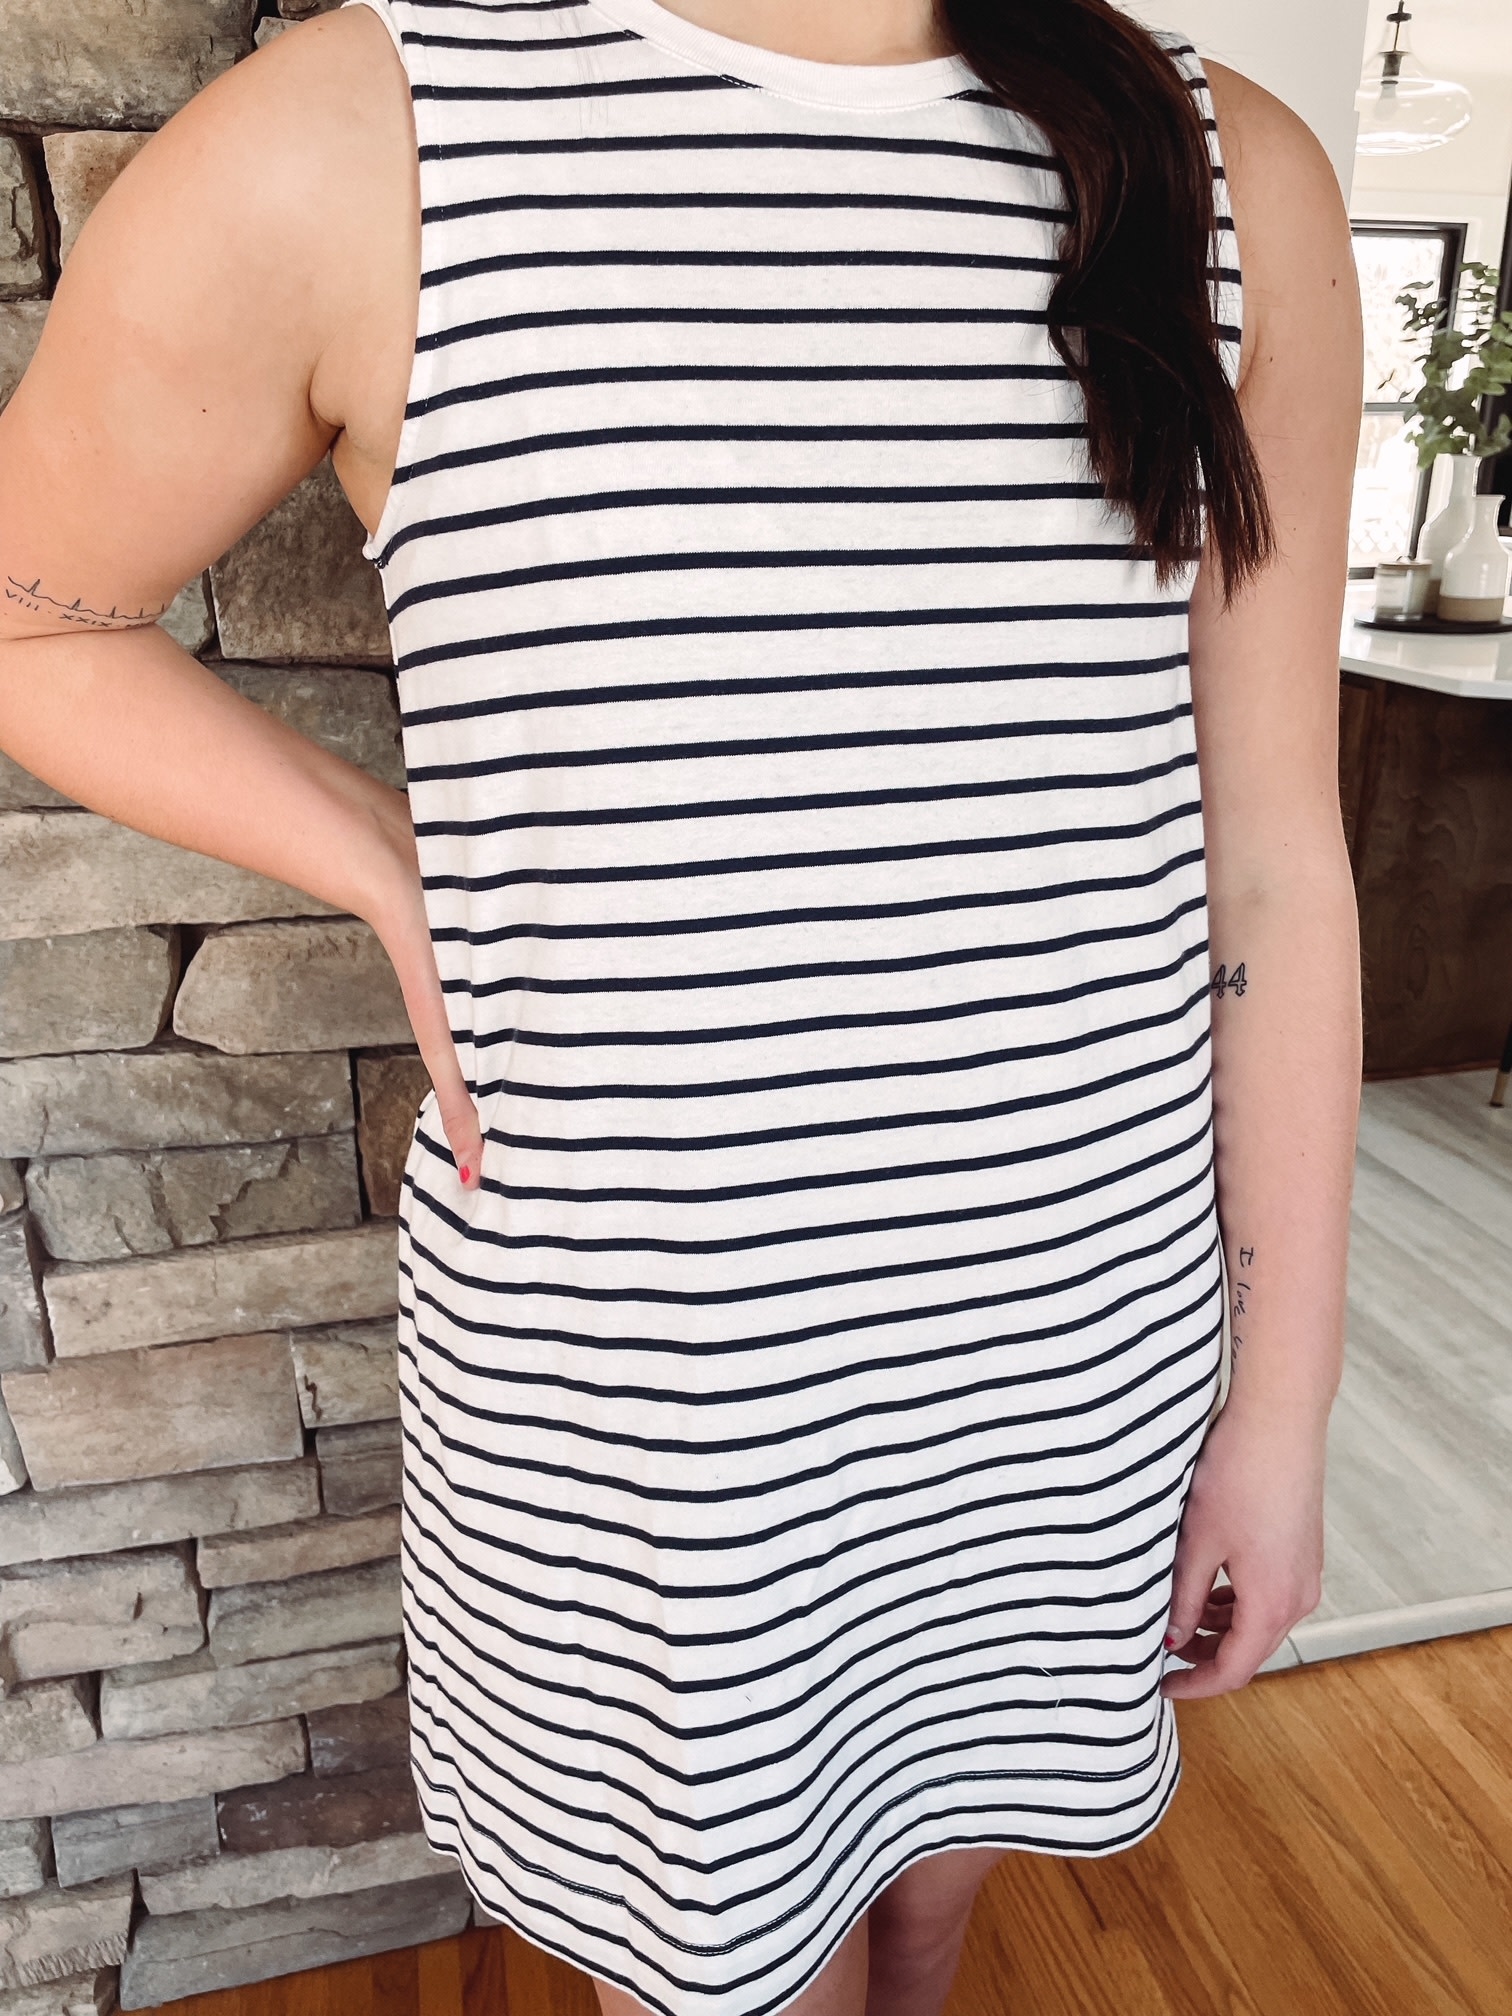 Sloane Navy Stripe Dress